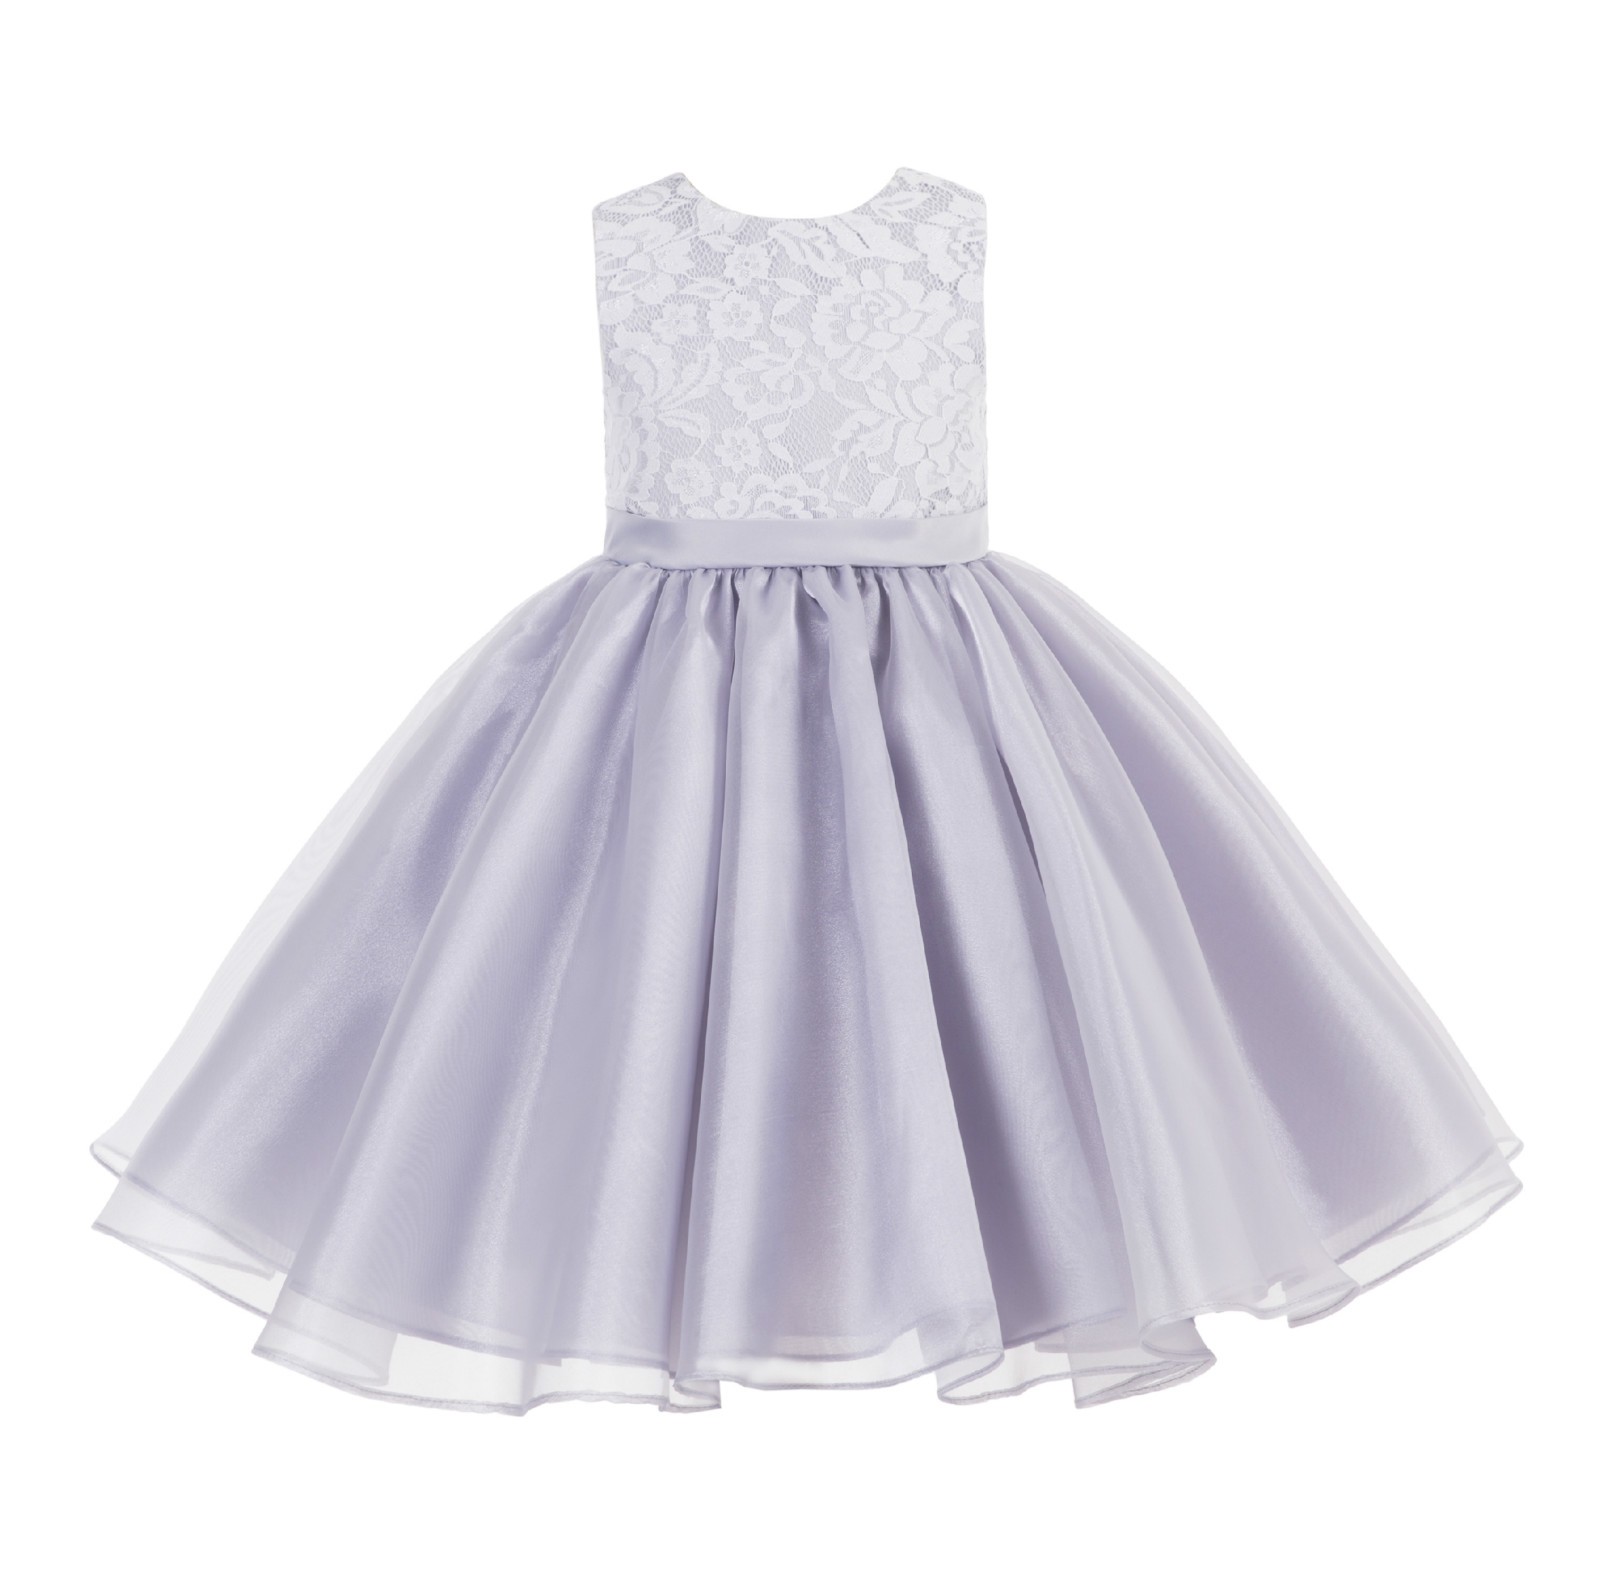 Silver Lace Organza Flower Girl Dress 186